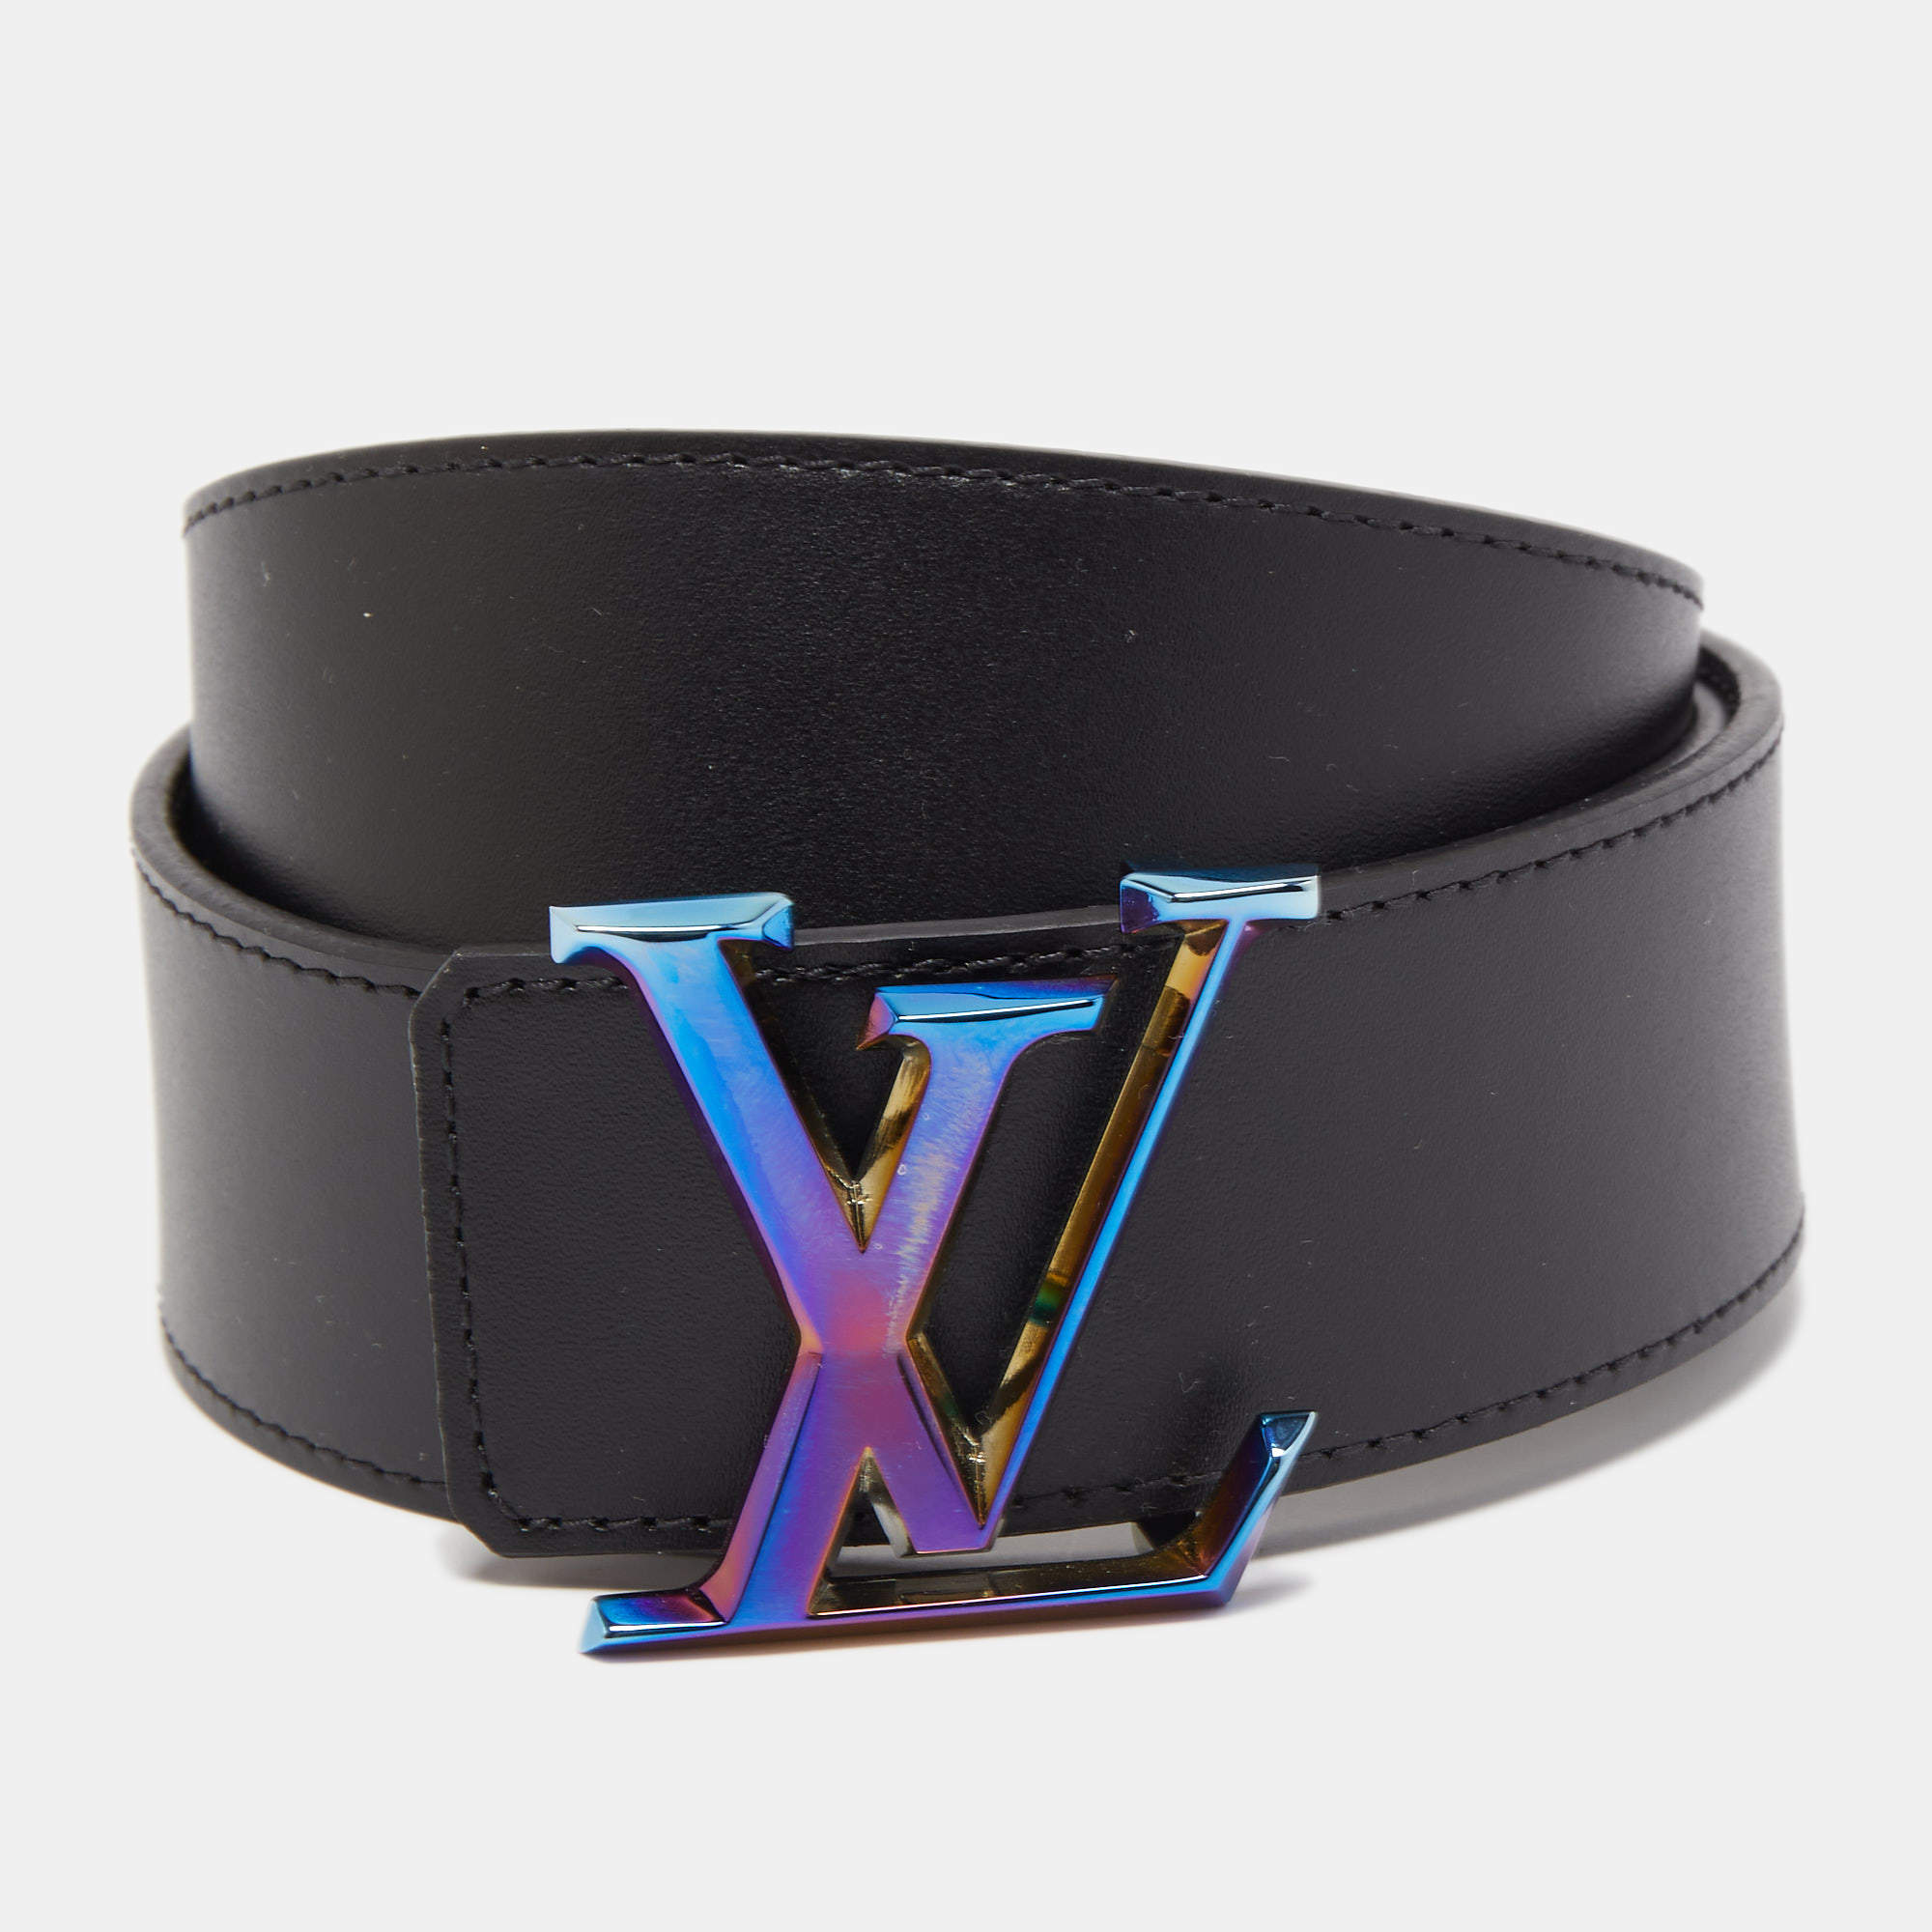 Louis Vuitton, Accessories, Louis Vuitton Belt